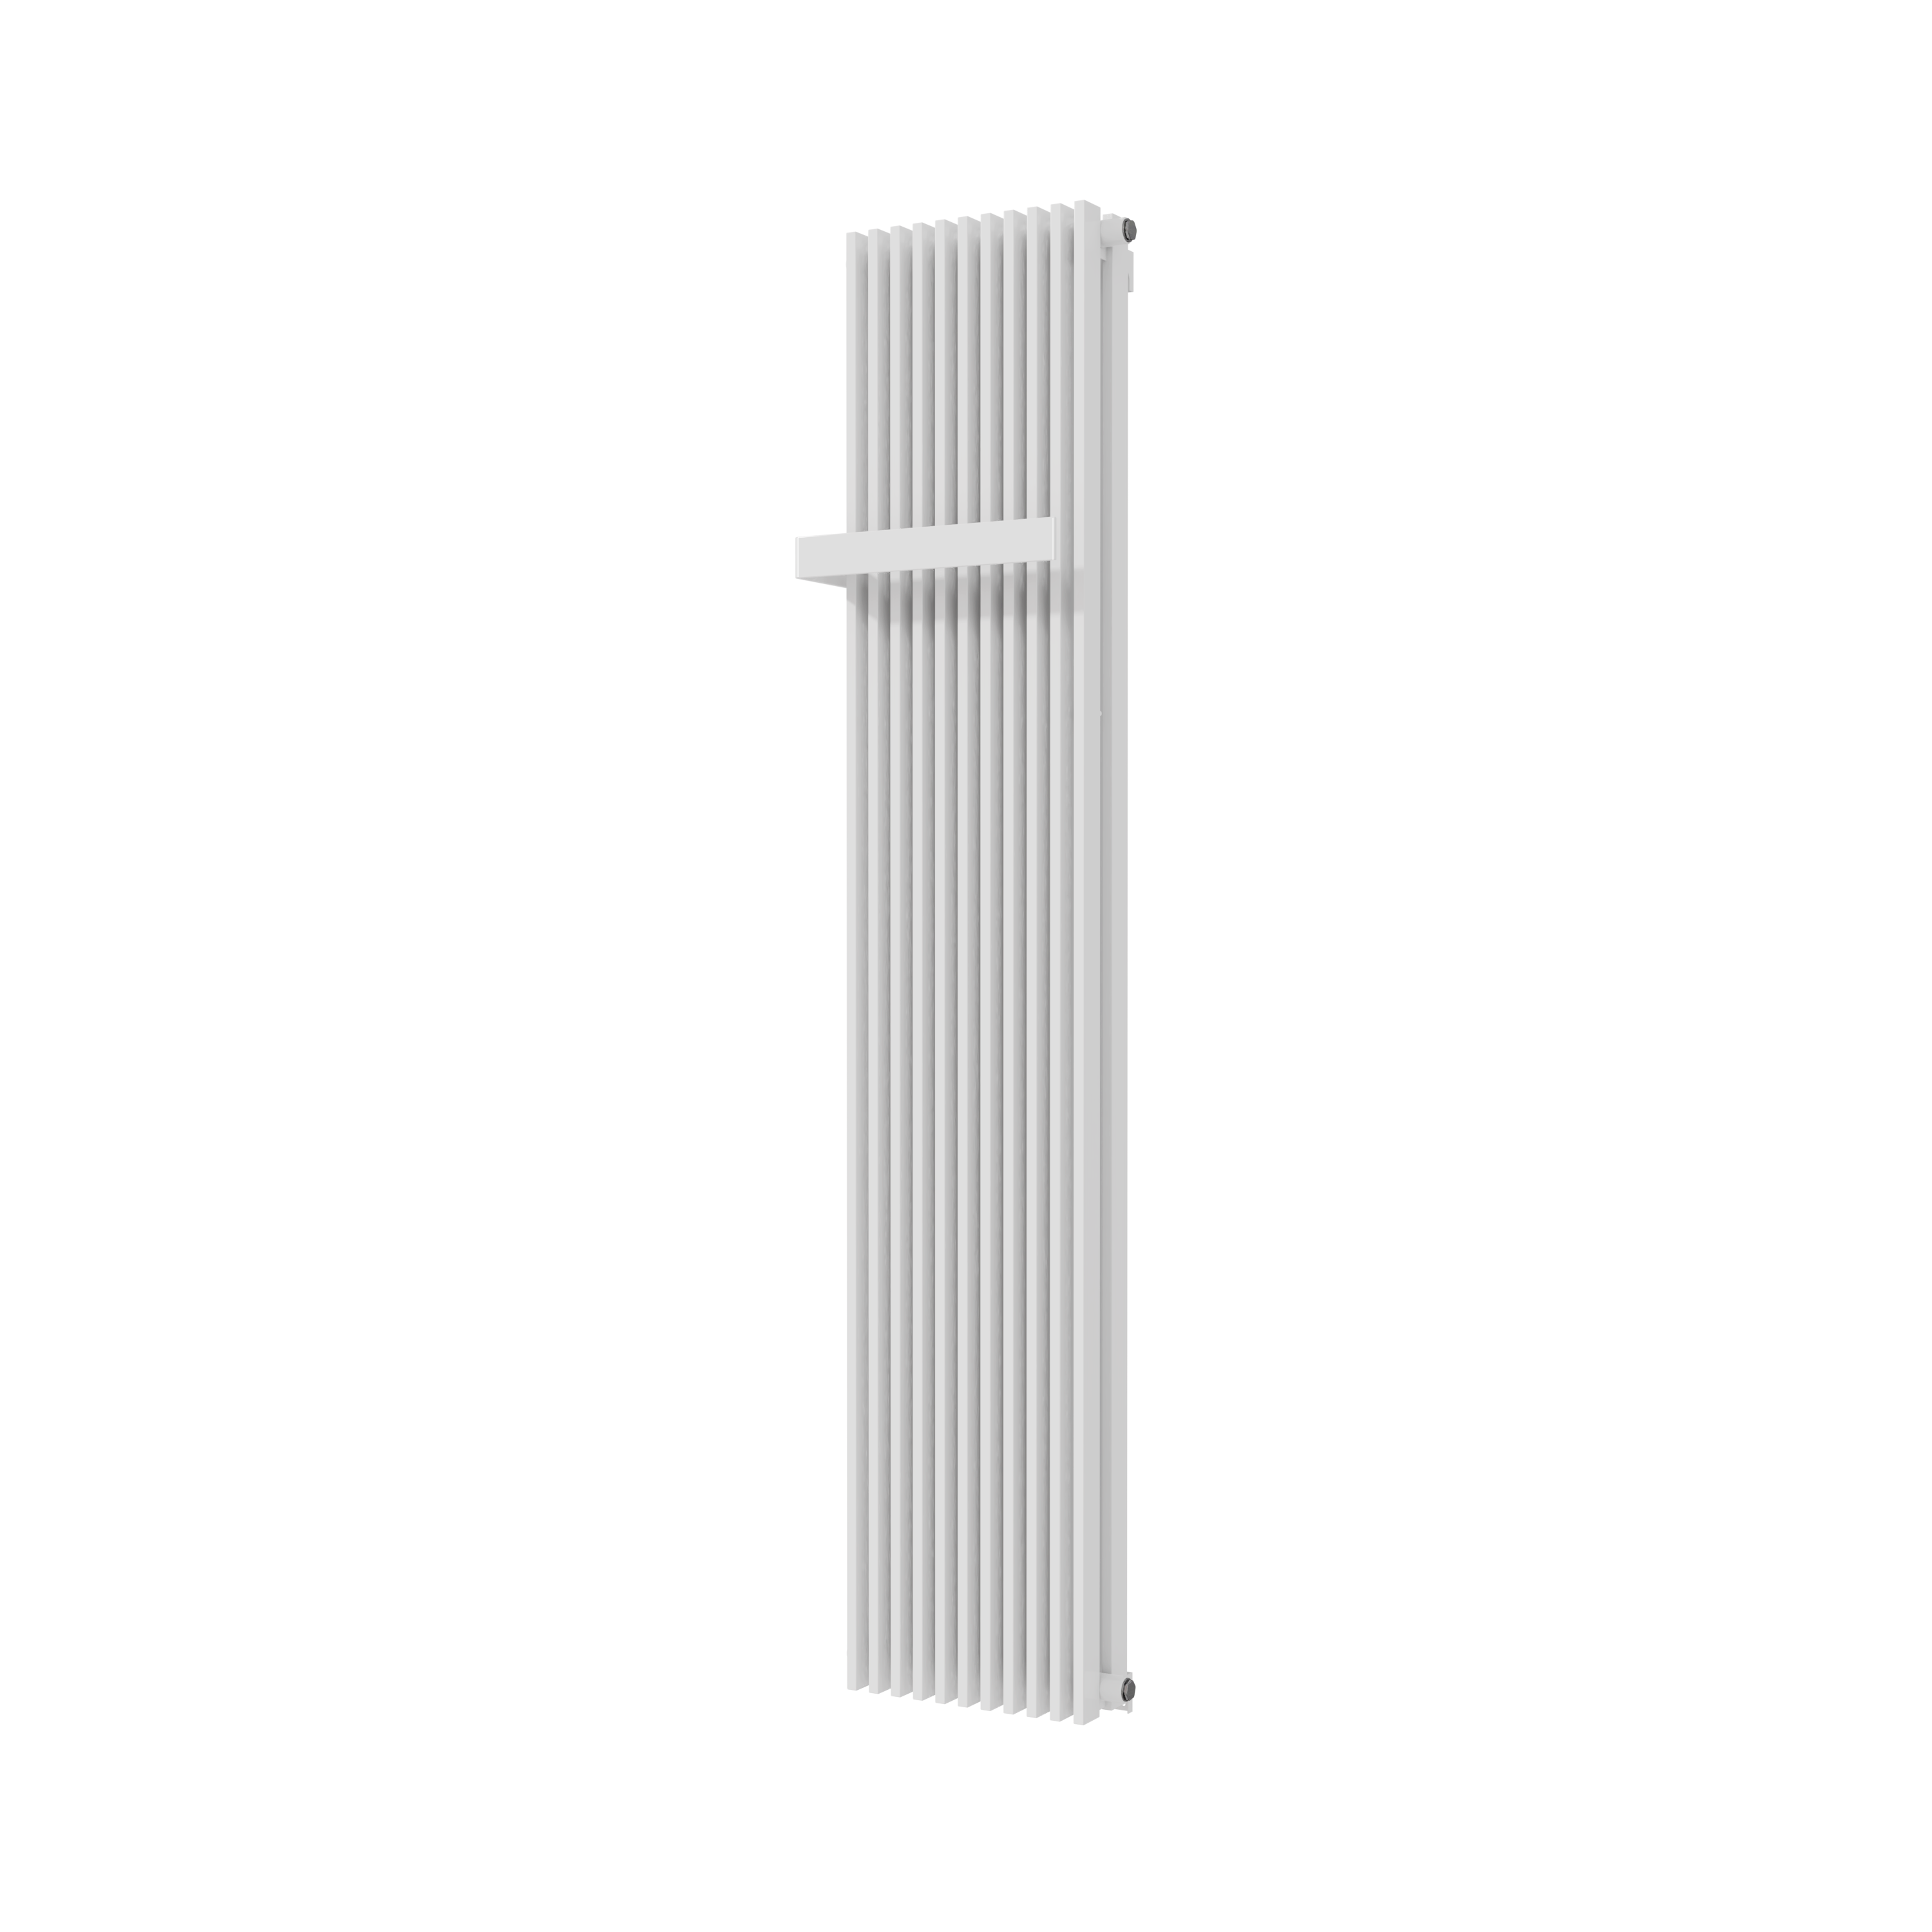 Vipera Corrason dubbele badkamerradiator 40 x 180 cm centrale verwarming hoogglans wit zij-en middenaansluiting 2,238W